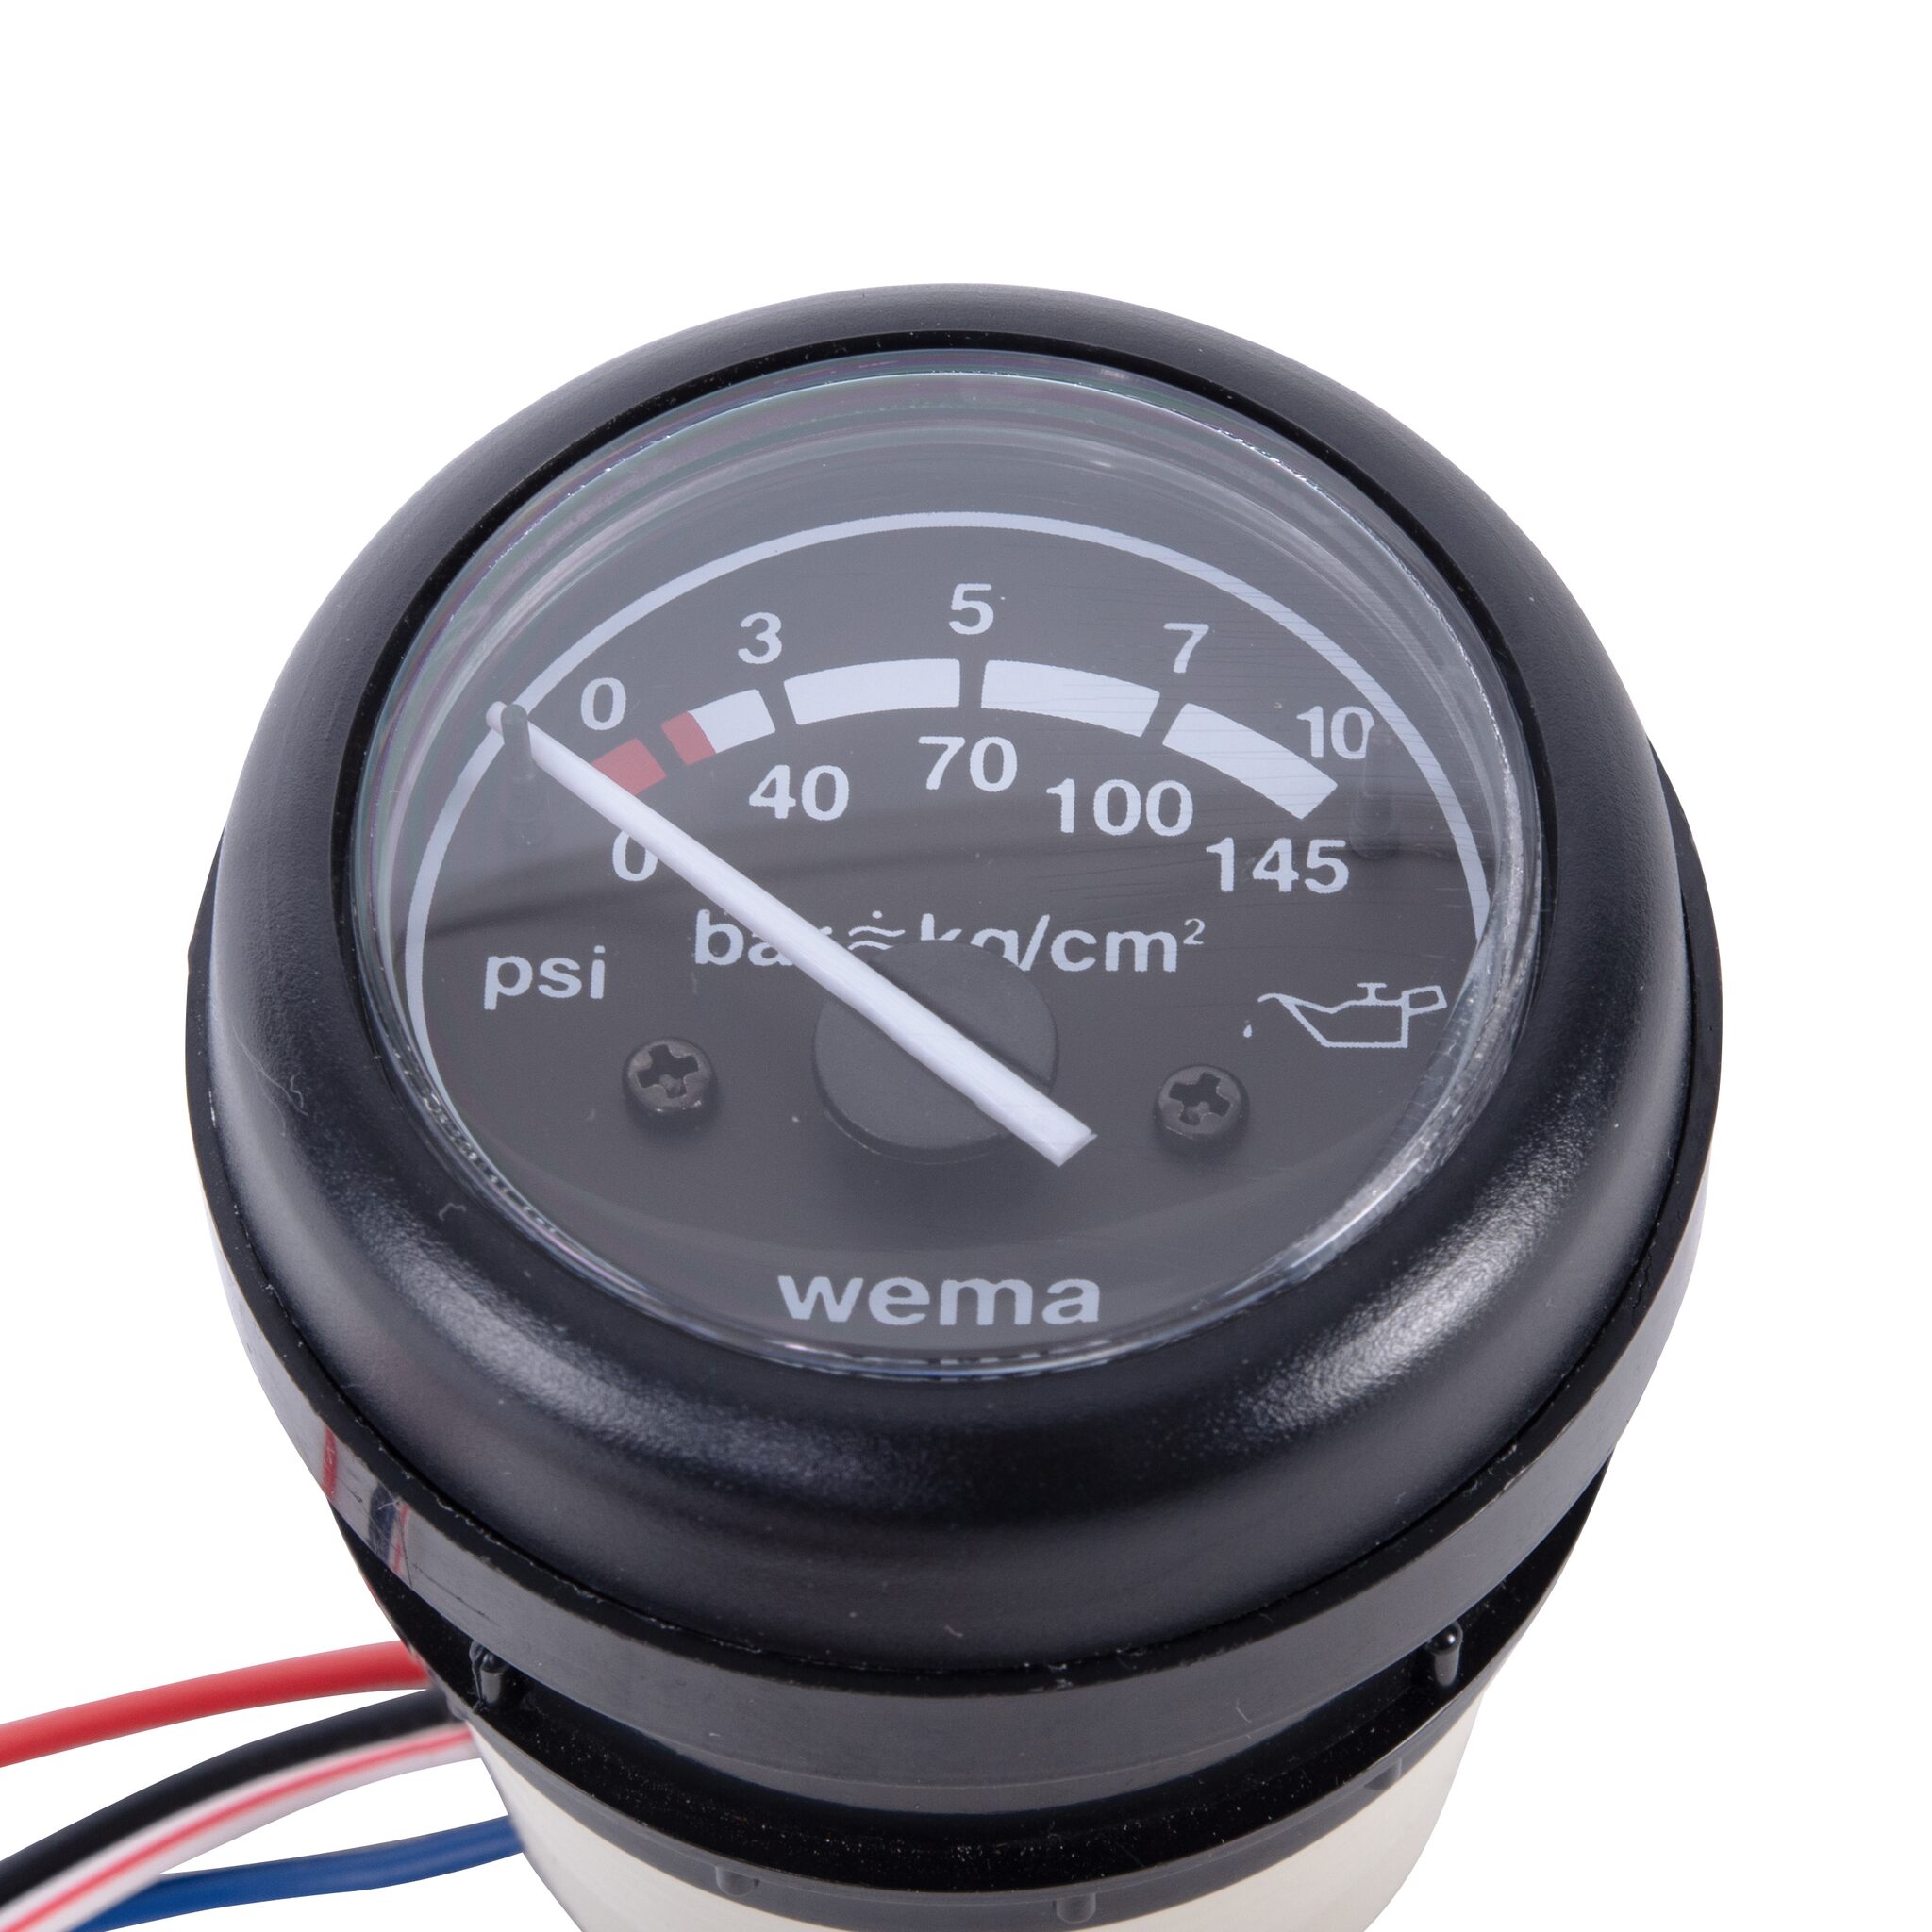 WEMA oil pressure indicator